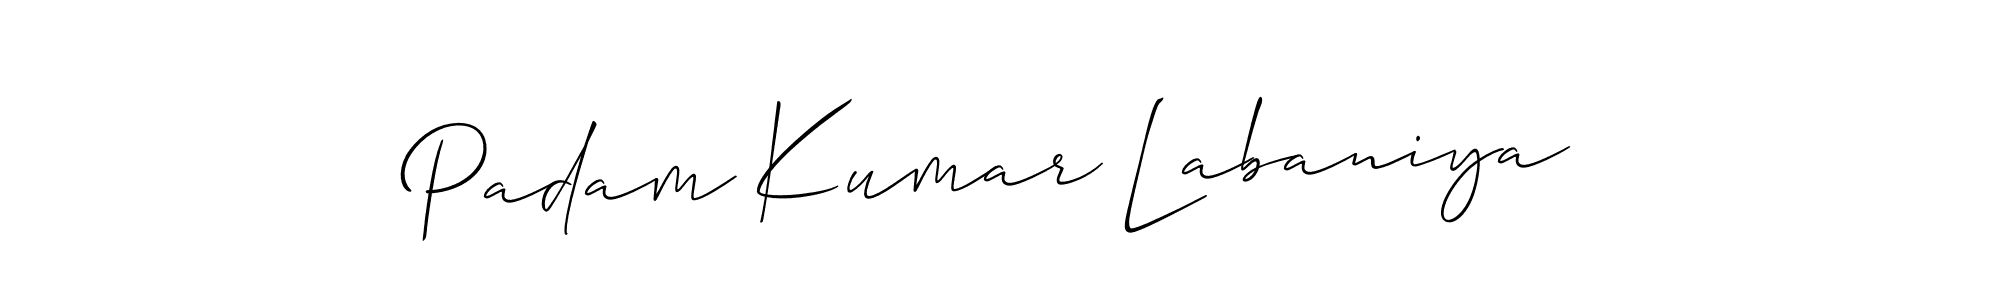 Make a beautiful signature design for name Padam Kumar Labaniya. Use this online signature maker to create a handwritten signature for free. Padam Kumar Labaniya signature style 2 images and pictures png